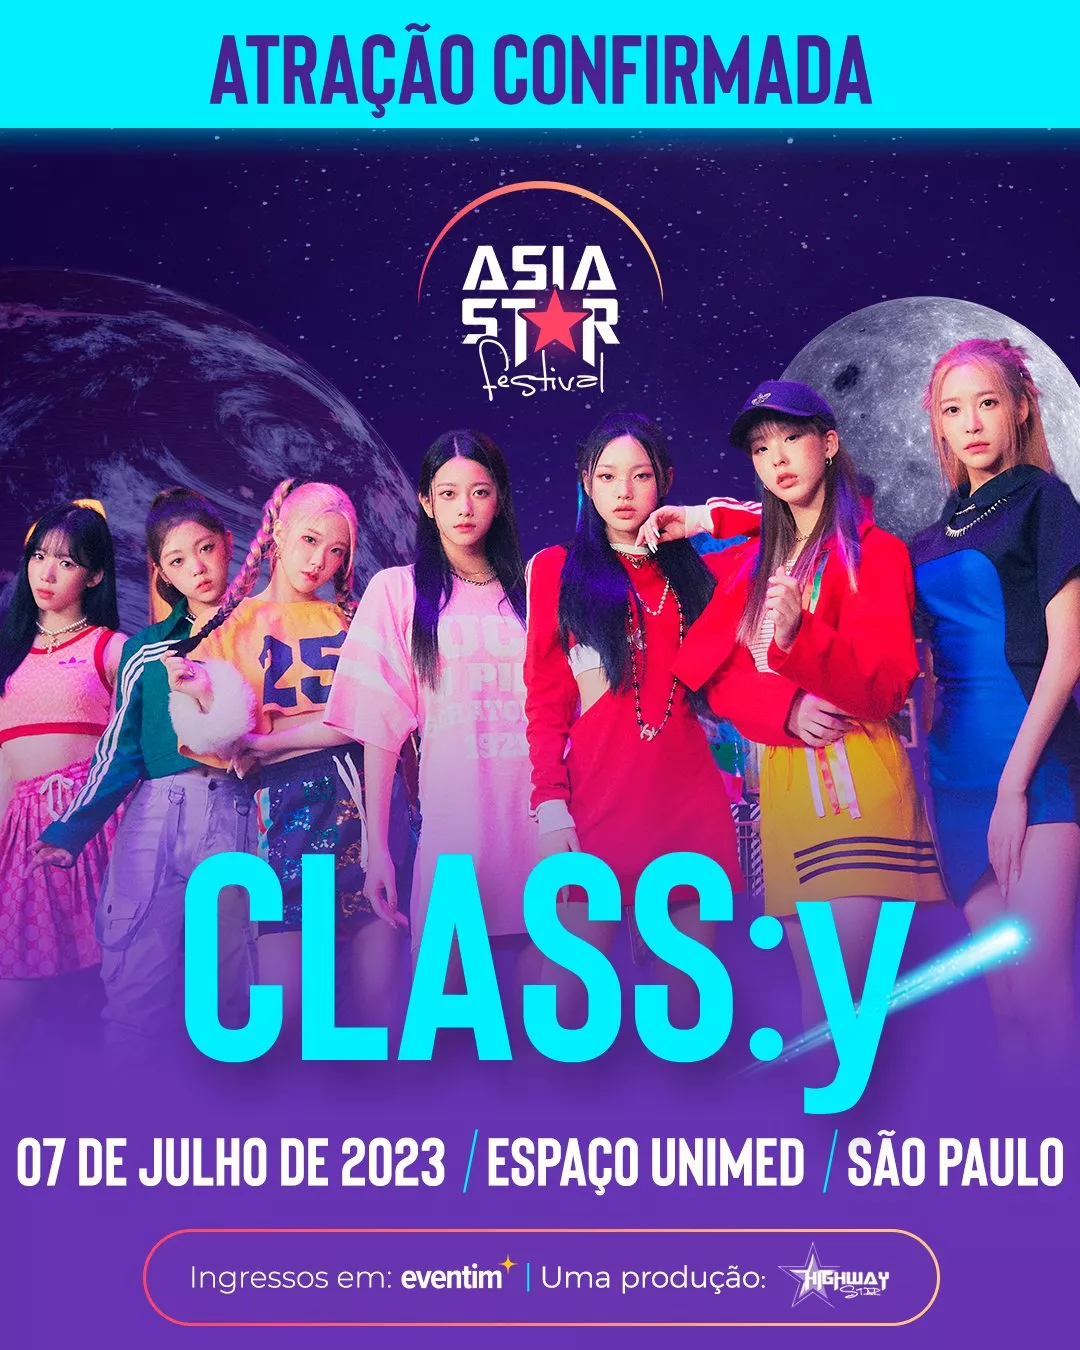 CLASS:y выступят на "Asia Star Festival" в Бразилии